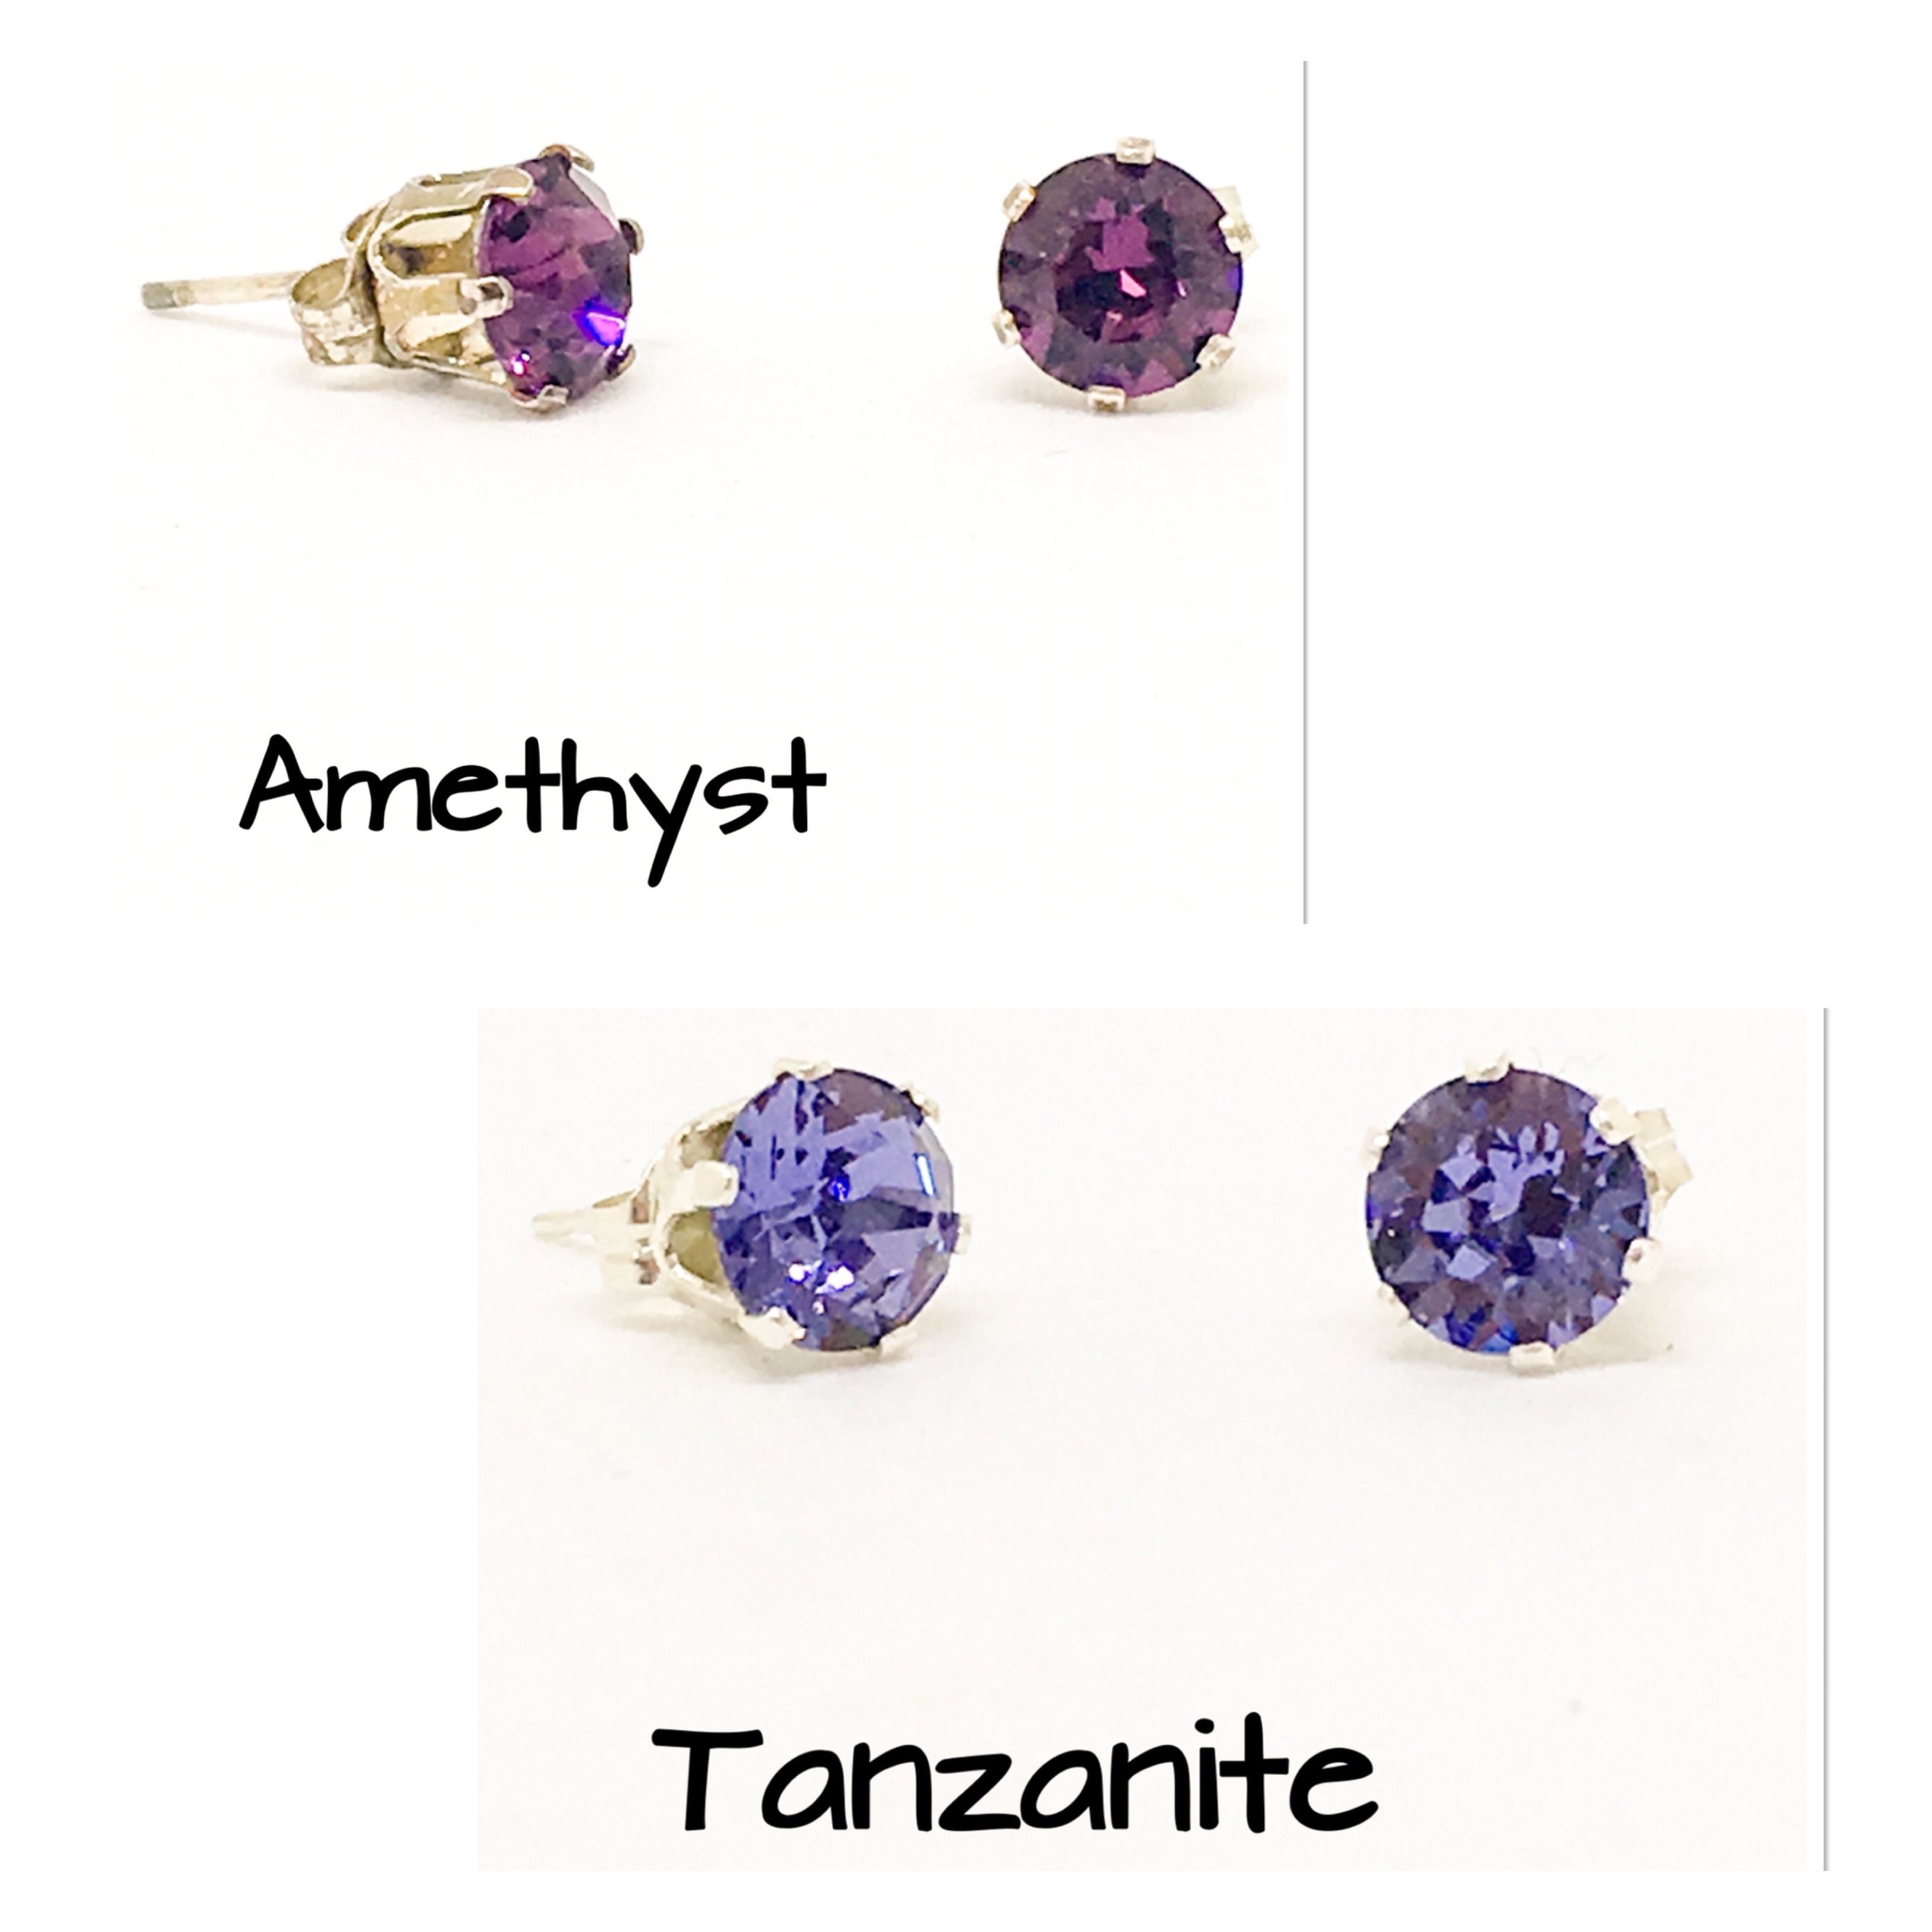 Swarovski stud earrings, 6mm stones, sterling silver studs, Purples